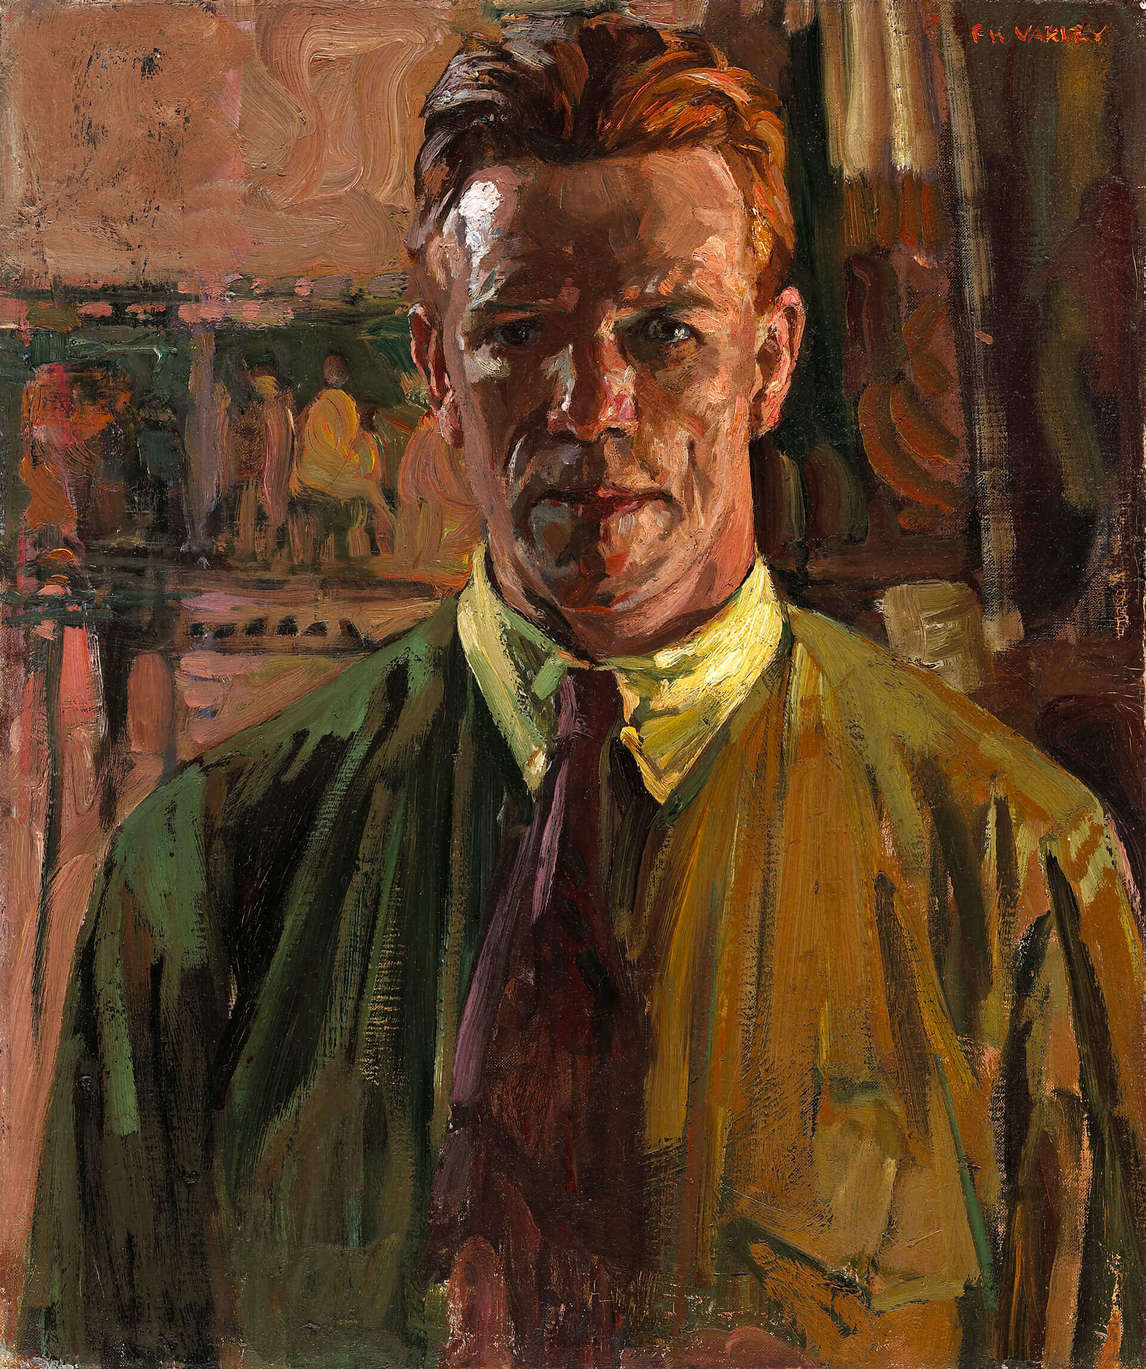 Art Canada Institute, Jock Macdonald, Self-portrait, by F.H. Varley, 1919